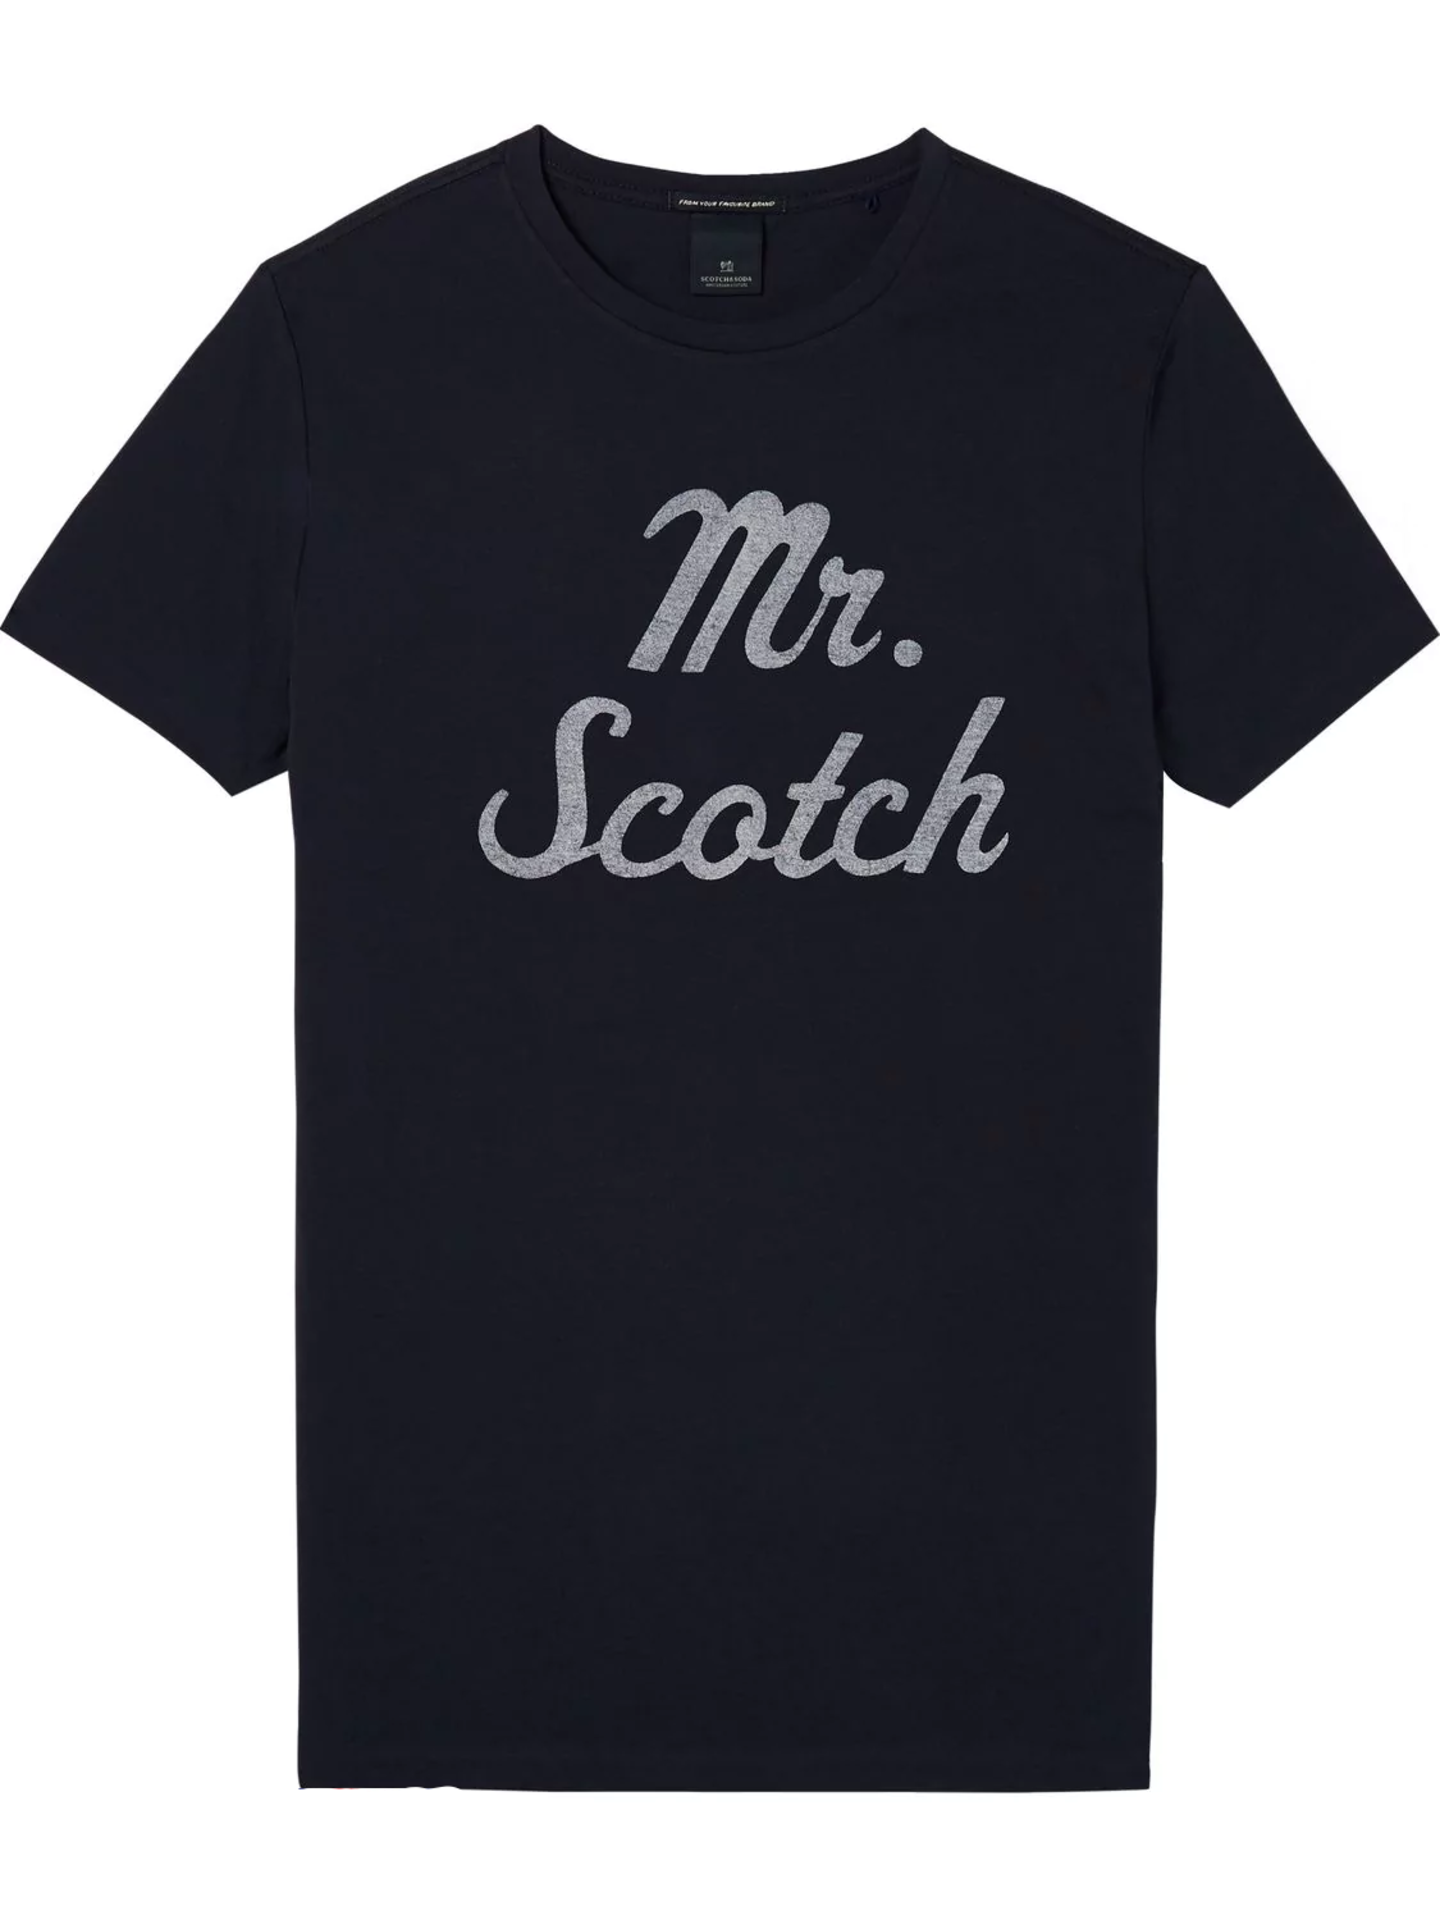 Men's scotch & soda smart casual midnight crew neck tee with logo uk m rrp £50